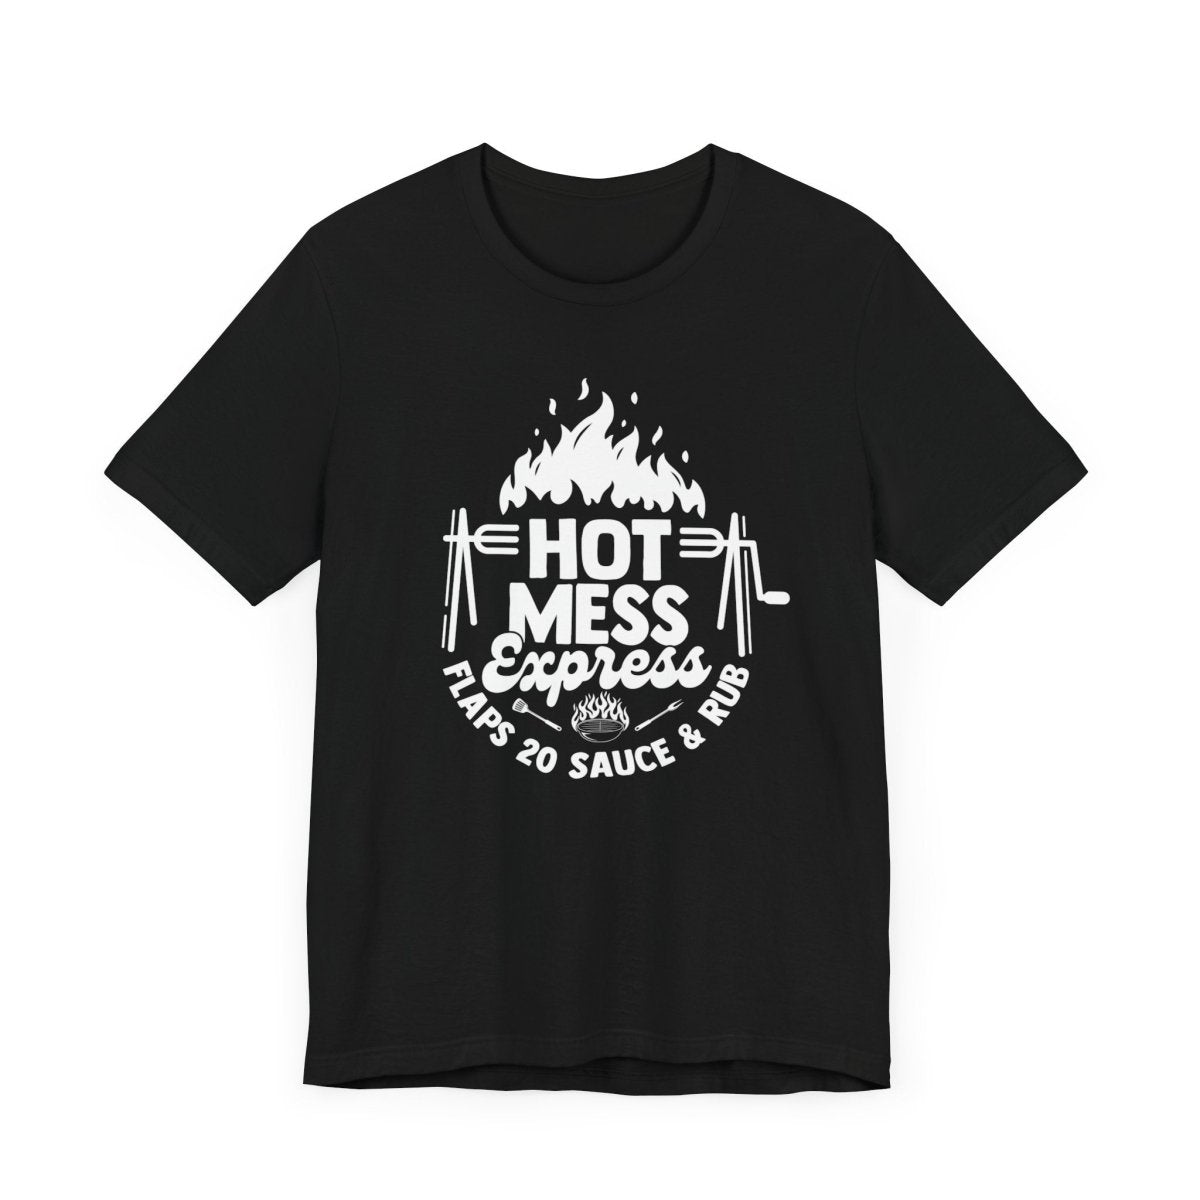 Hot Mess Express - Flaps 20 - Flaps 20 Sauce and Rub - T-Shirt